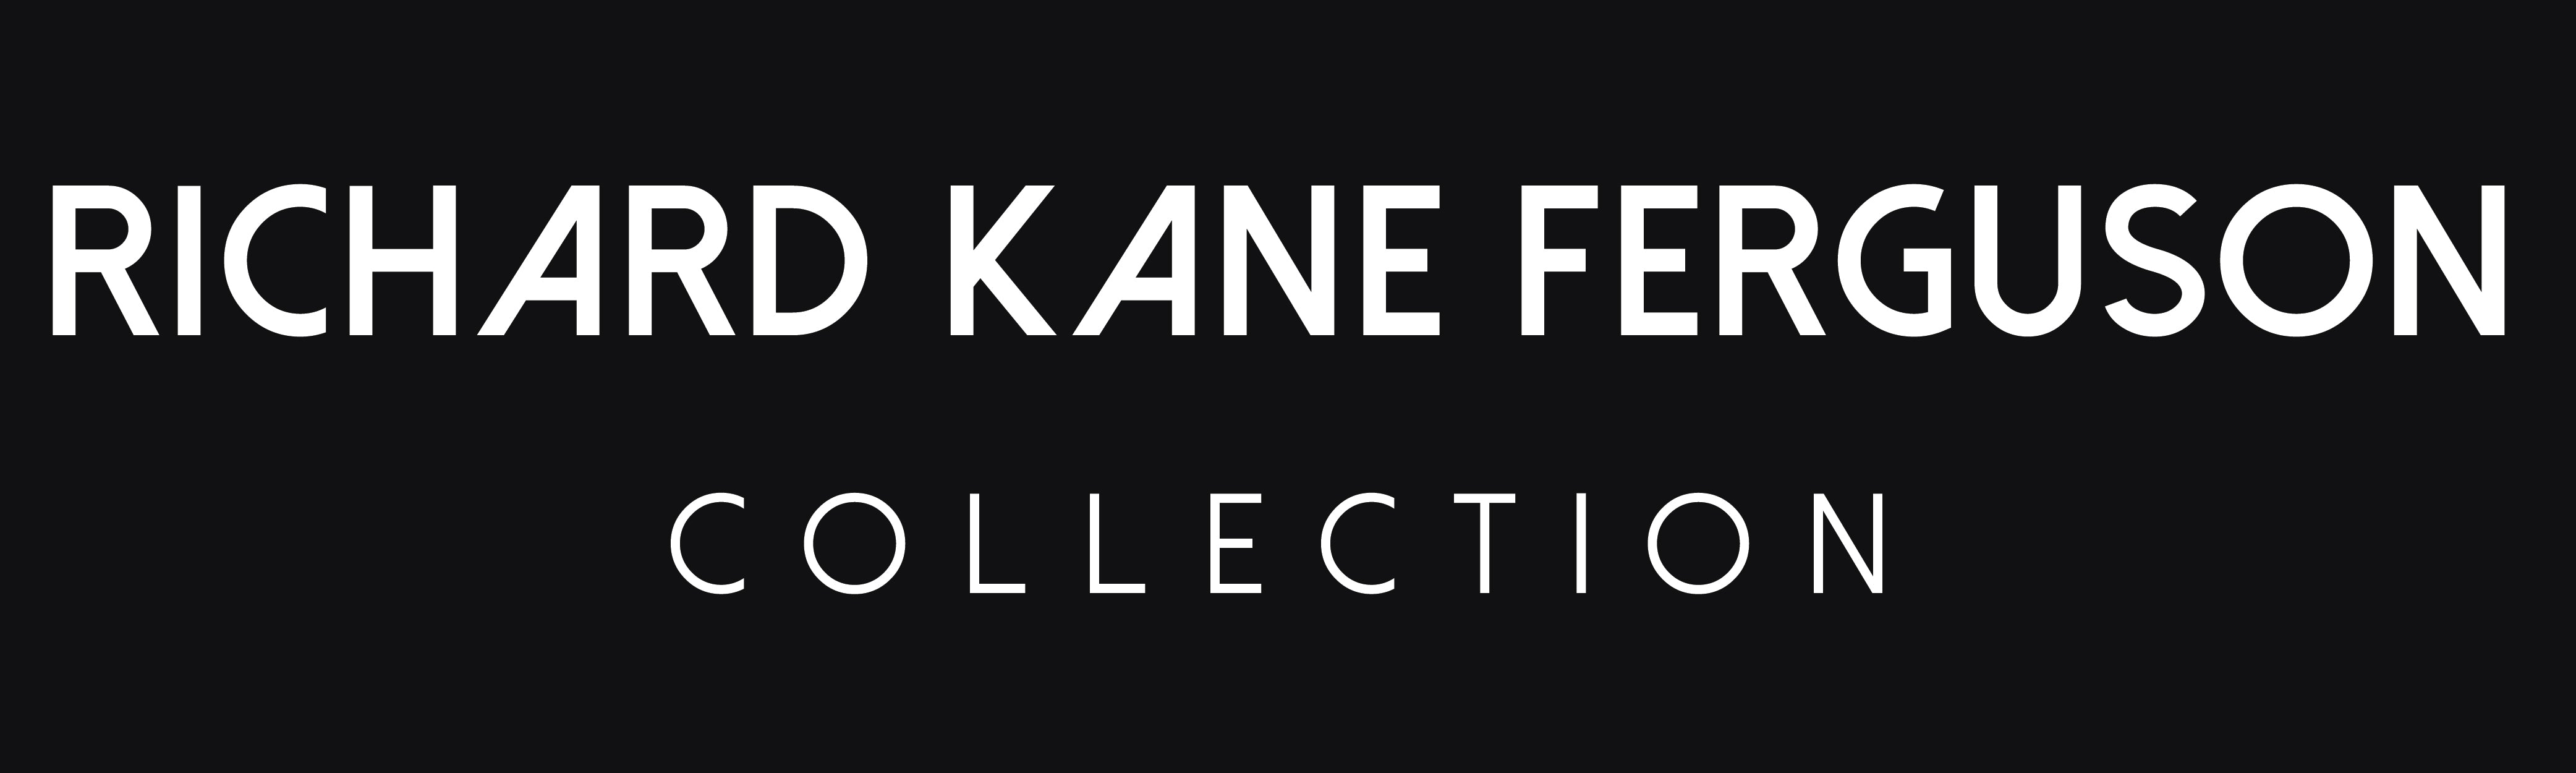 Richard Kane Ferguson Collection